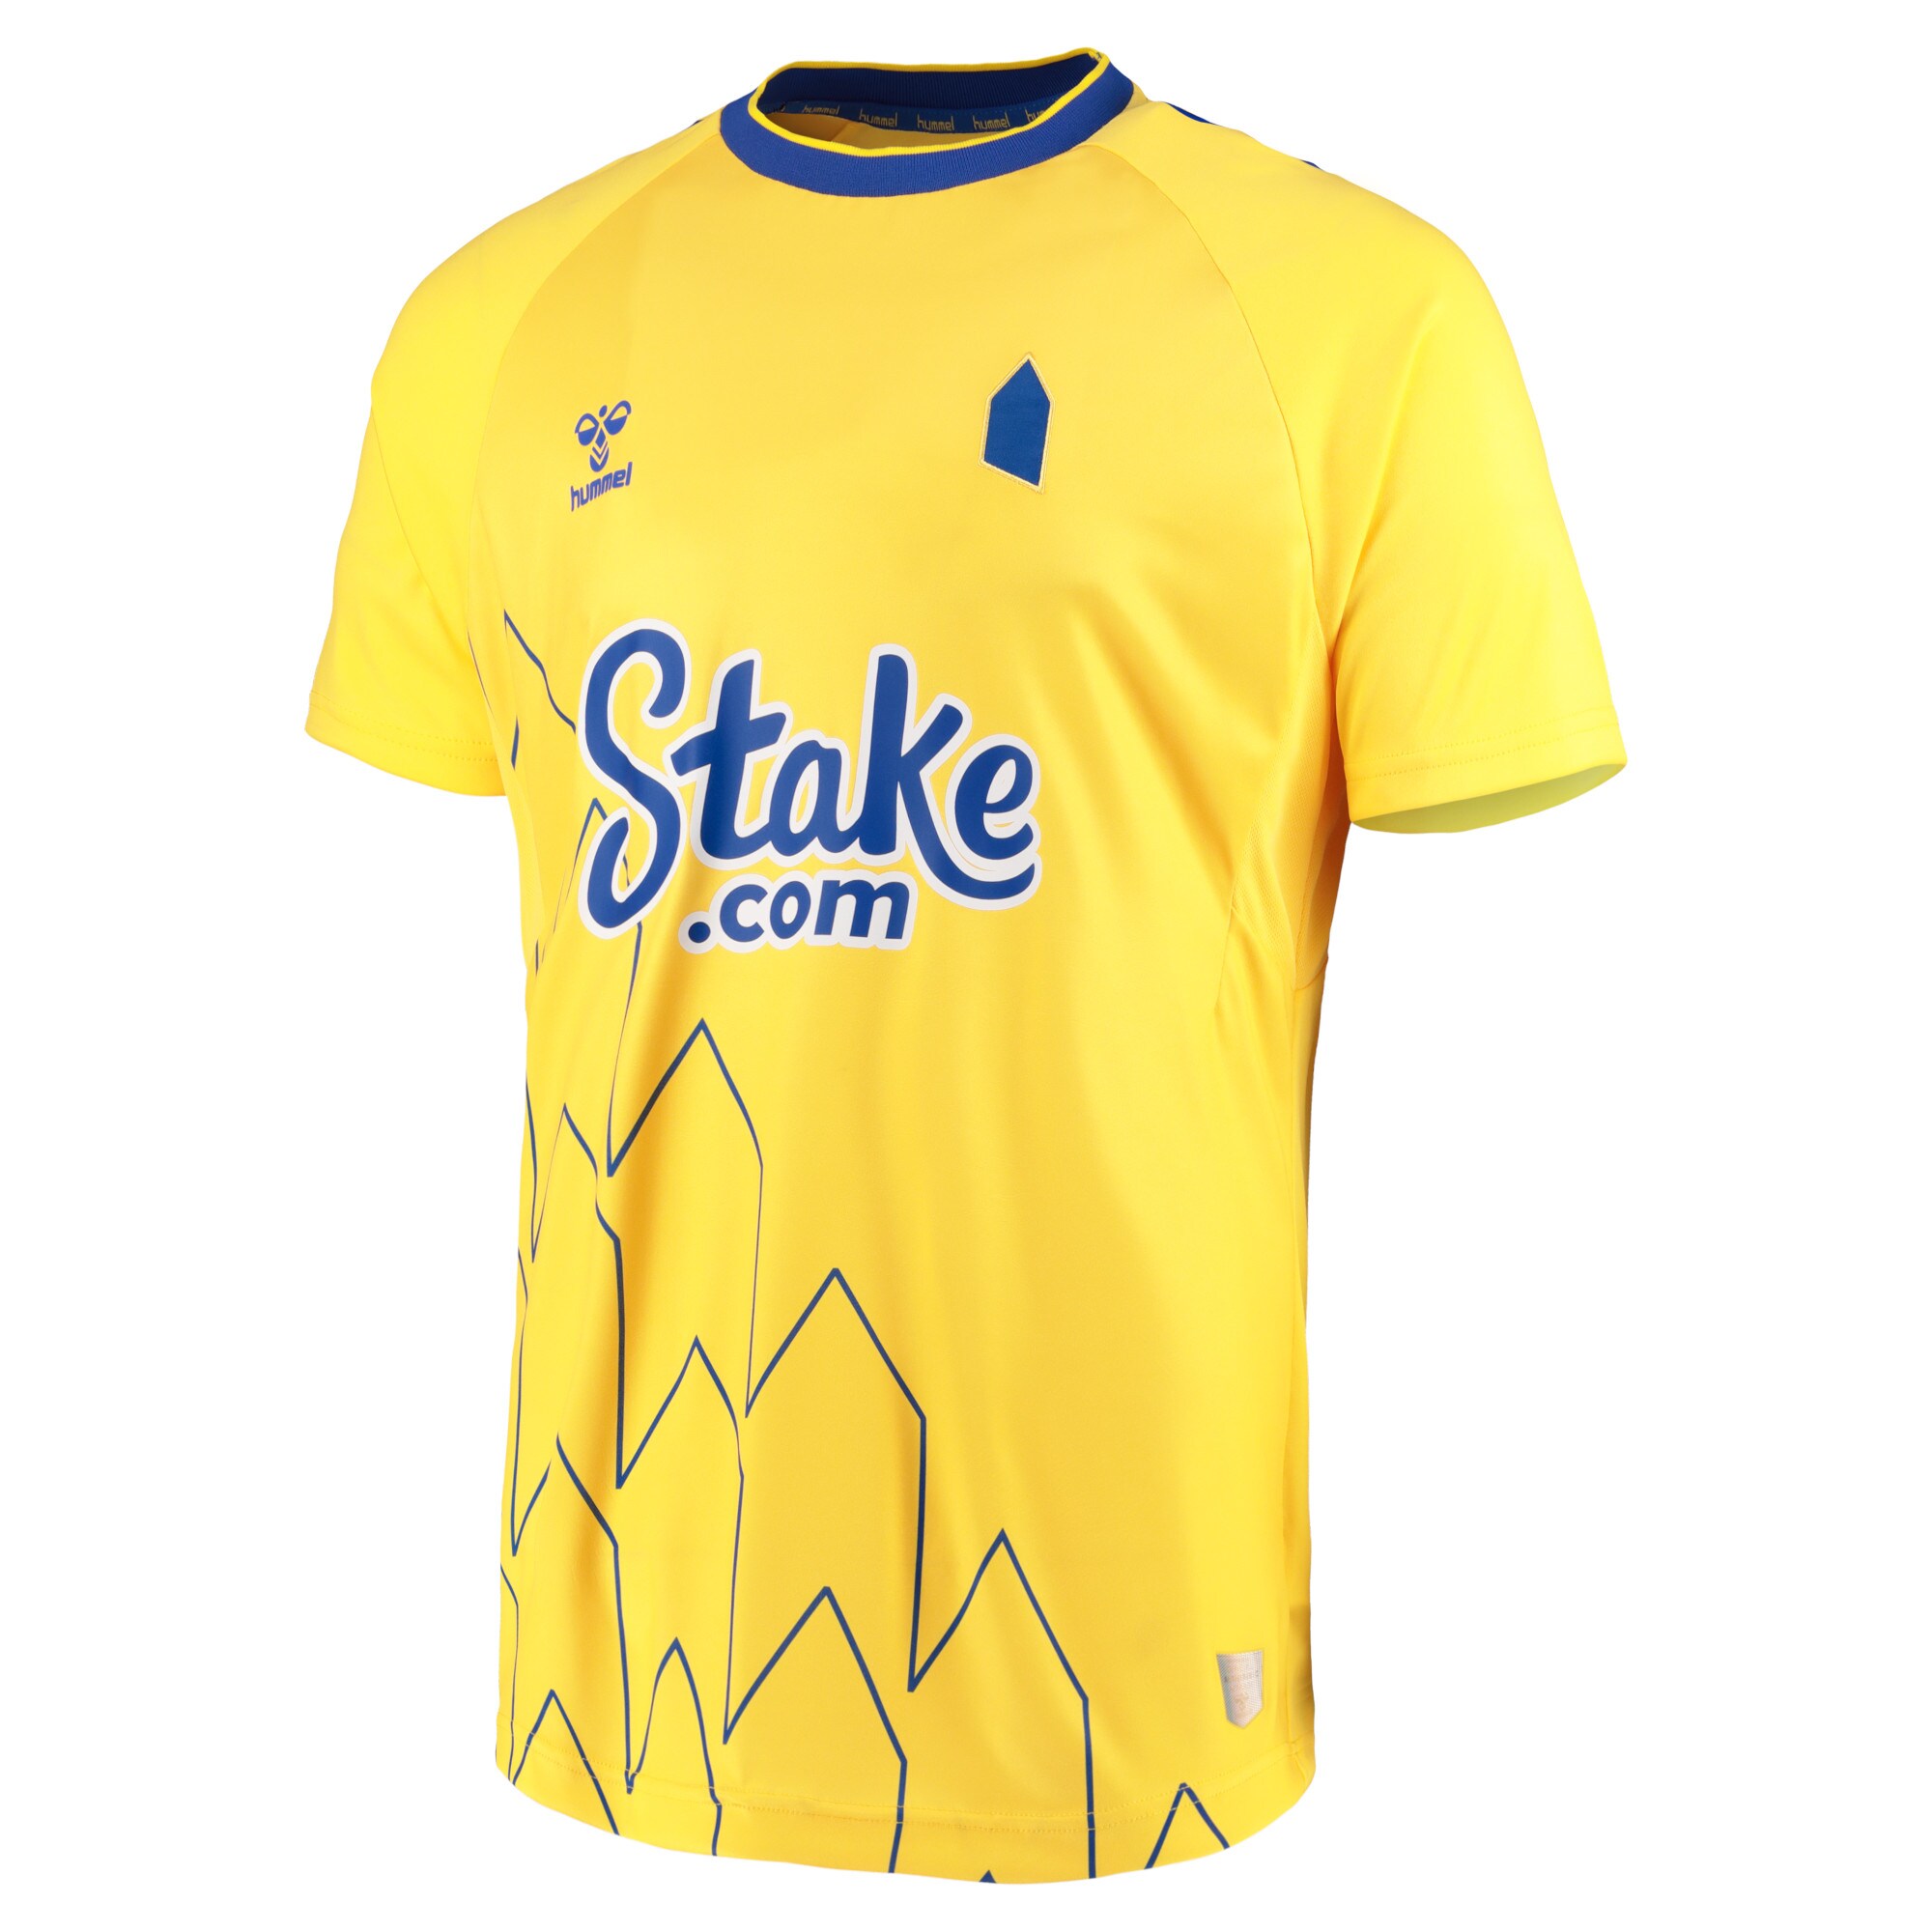 Everton Third Shirt 2022-23 with Davies 26 printing